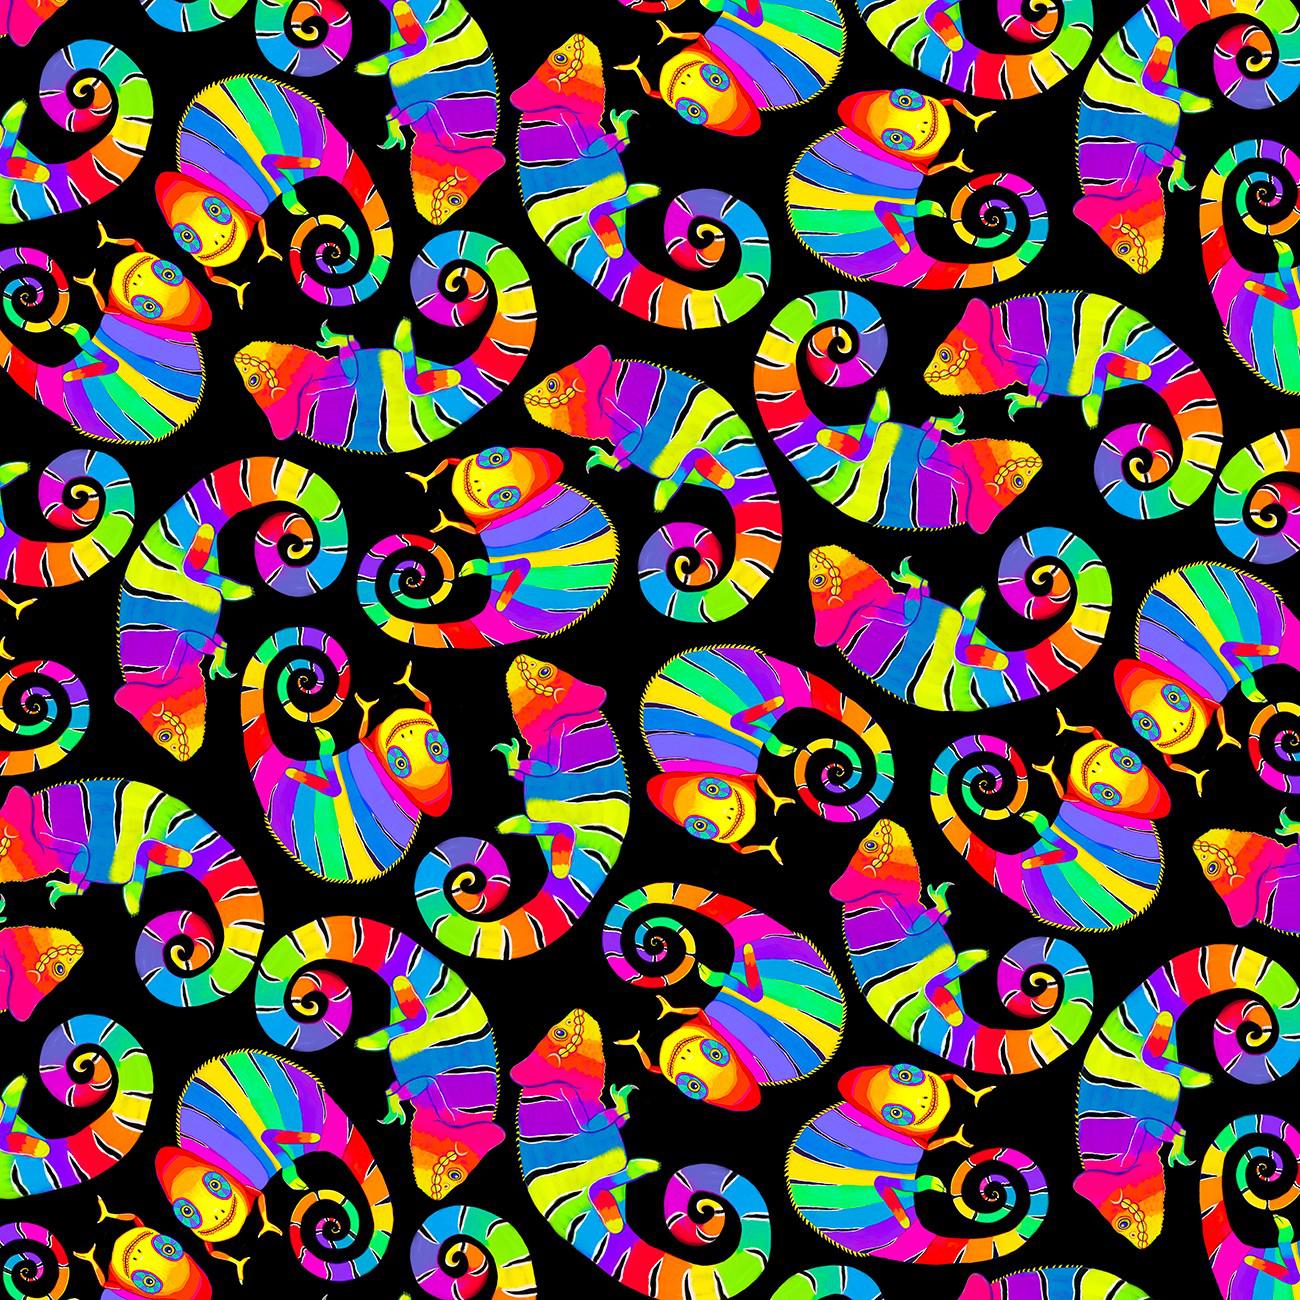 Prismatic Black Rainbow Chameleons Digital Fabric